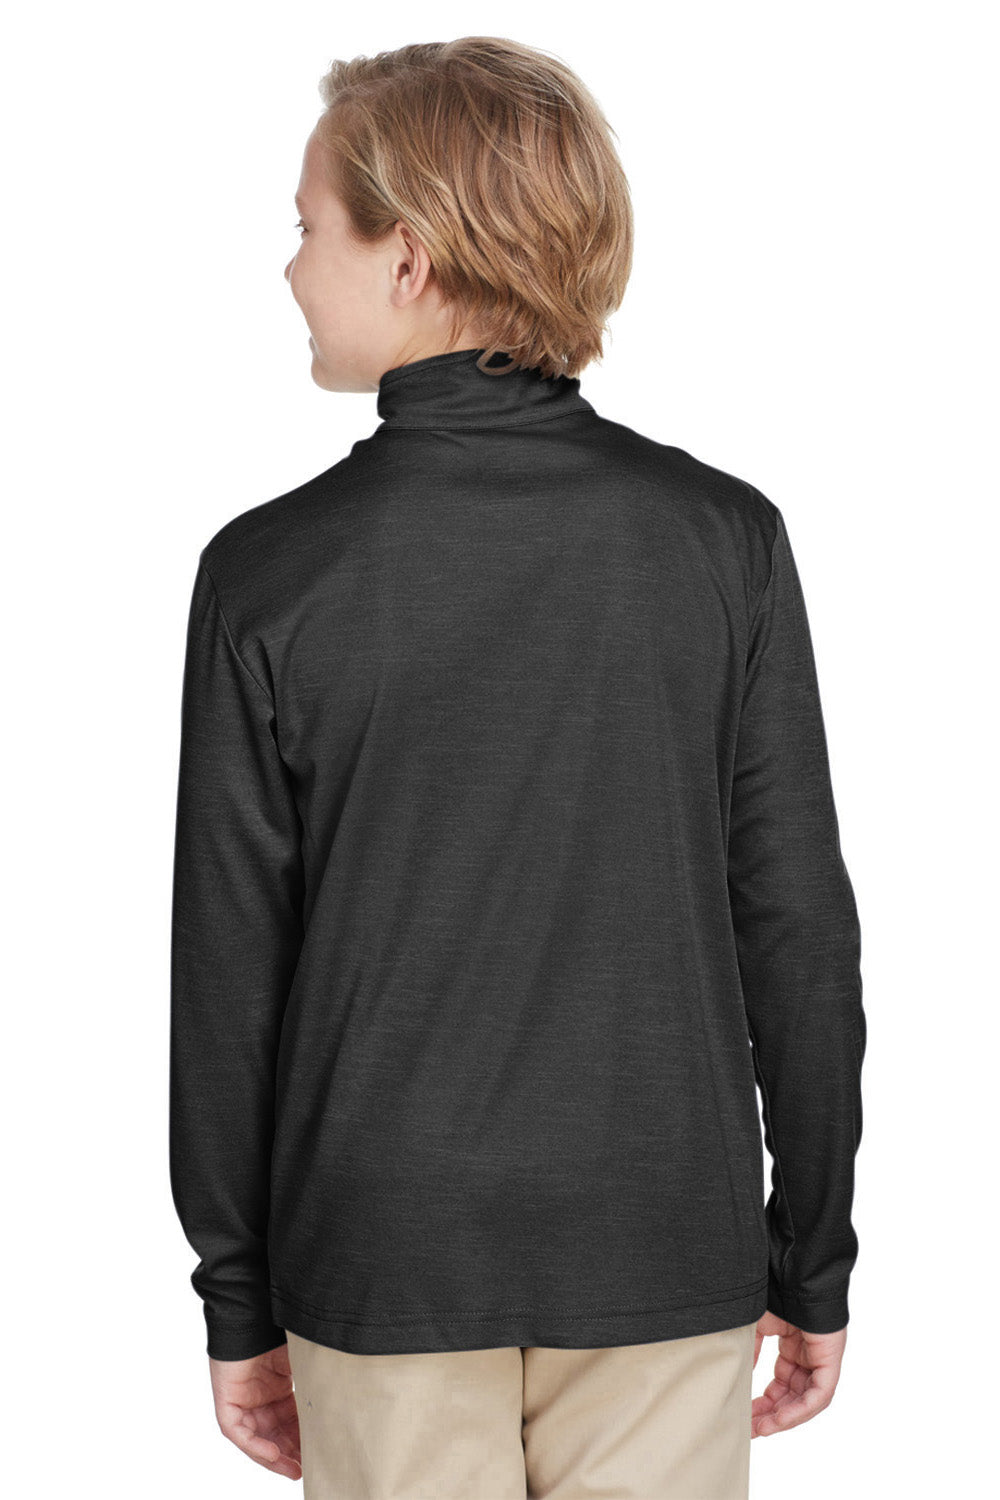 Team 365 TT31HY Youth Zone Sonic Performance Moisture Wicking 1/4 Zip Sweatshirt Black Back